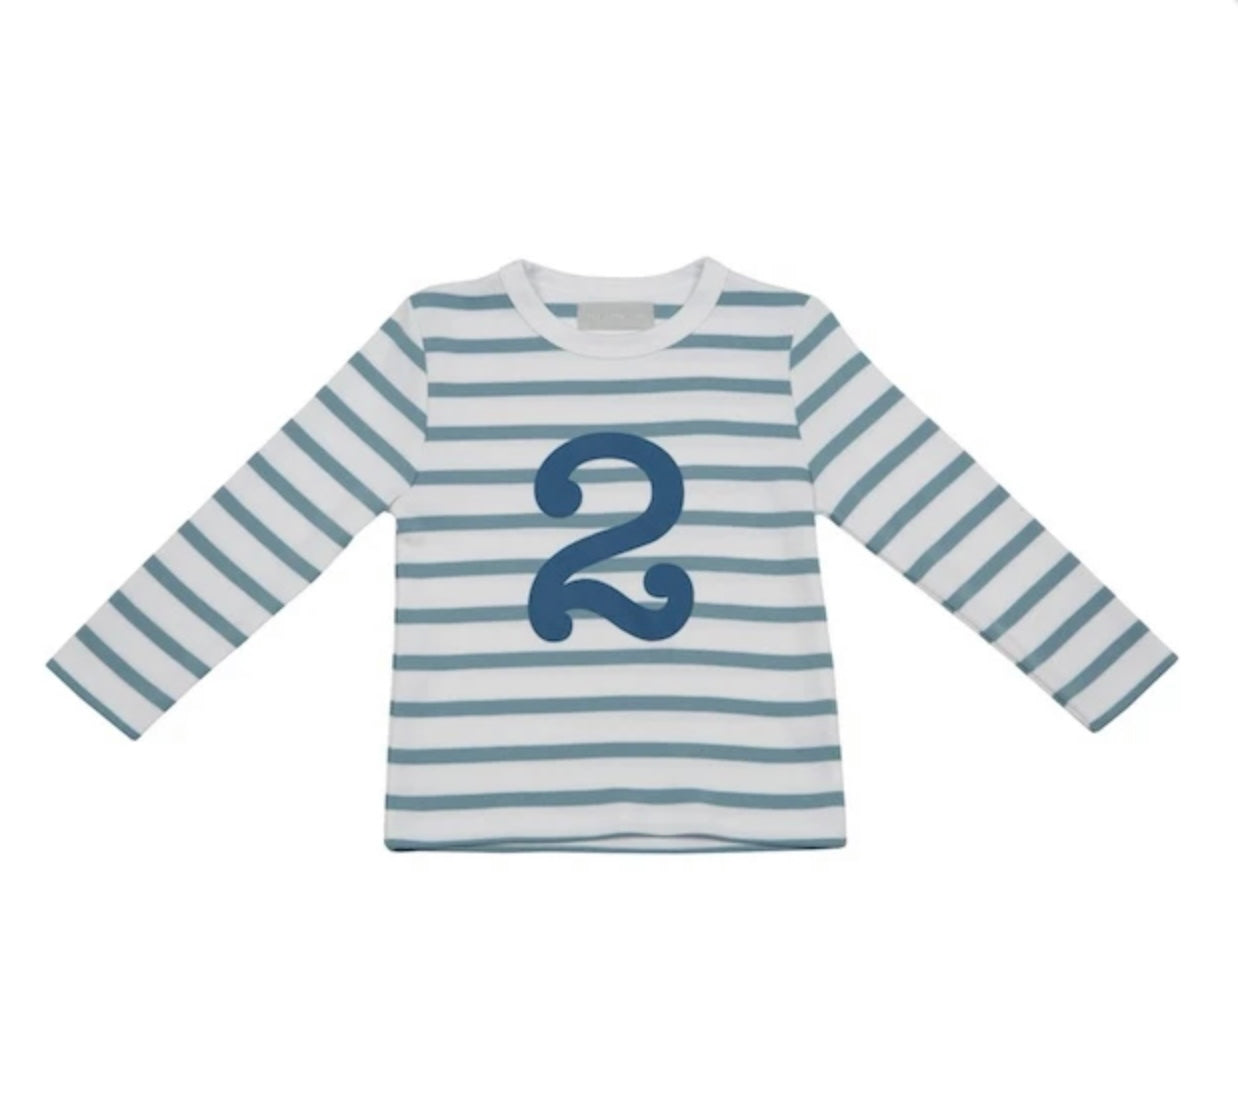 Age 2 Ocean Blue and White Breton Striped T-Shirt